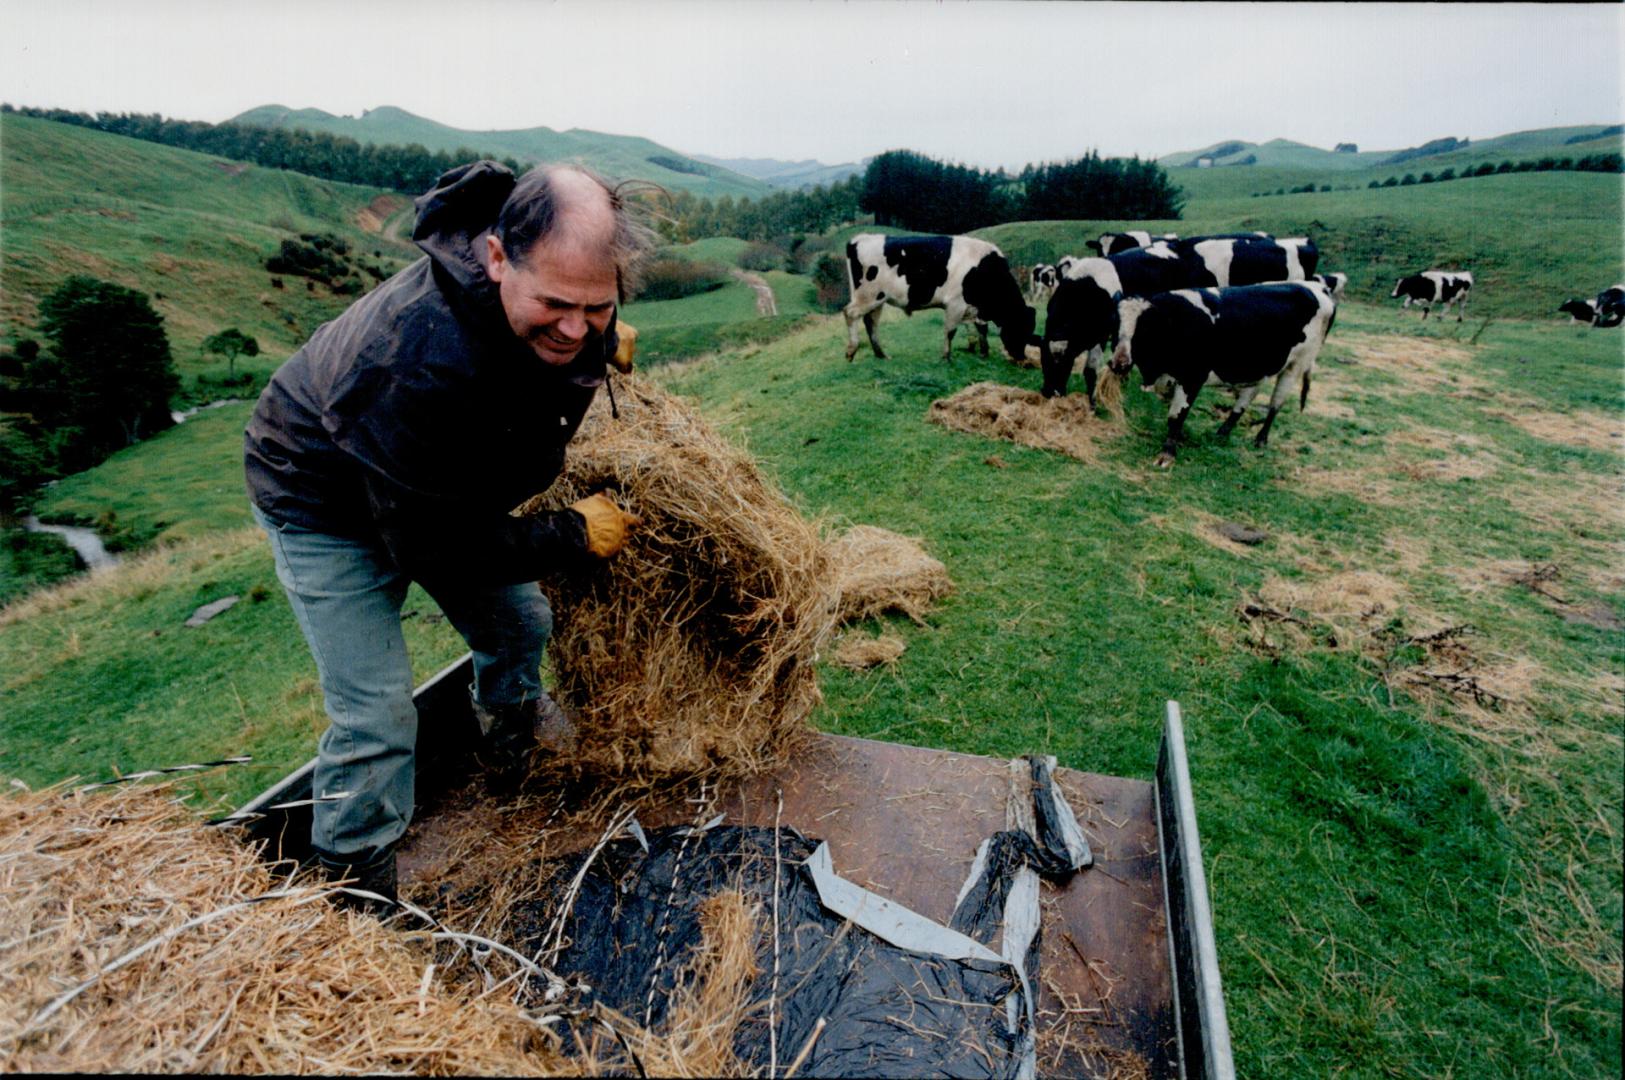 Farmer Bill Garland near combridge feeding some of his 500 head of cattle